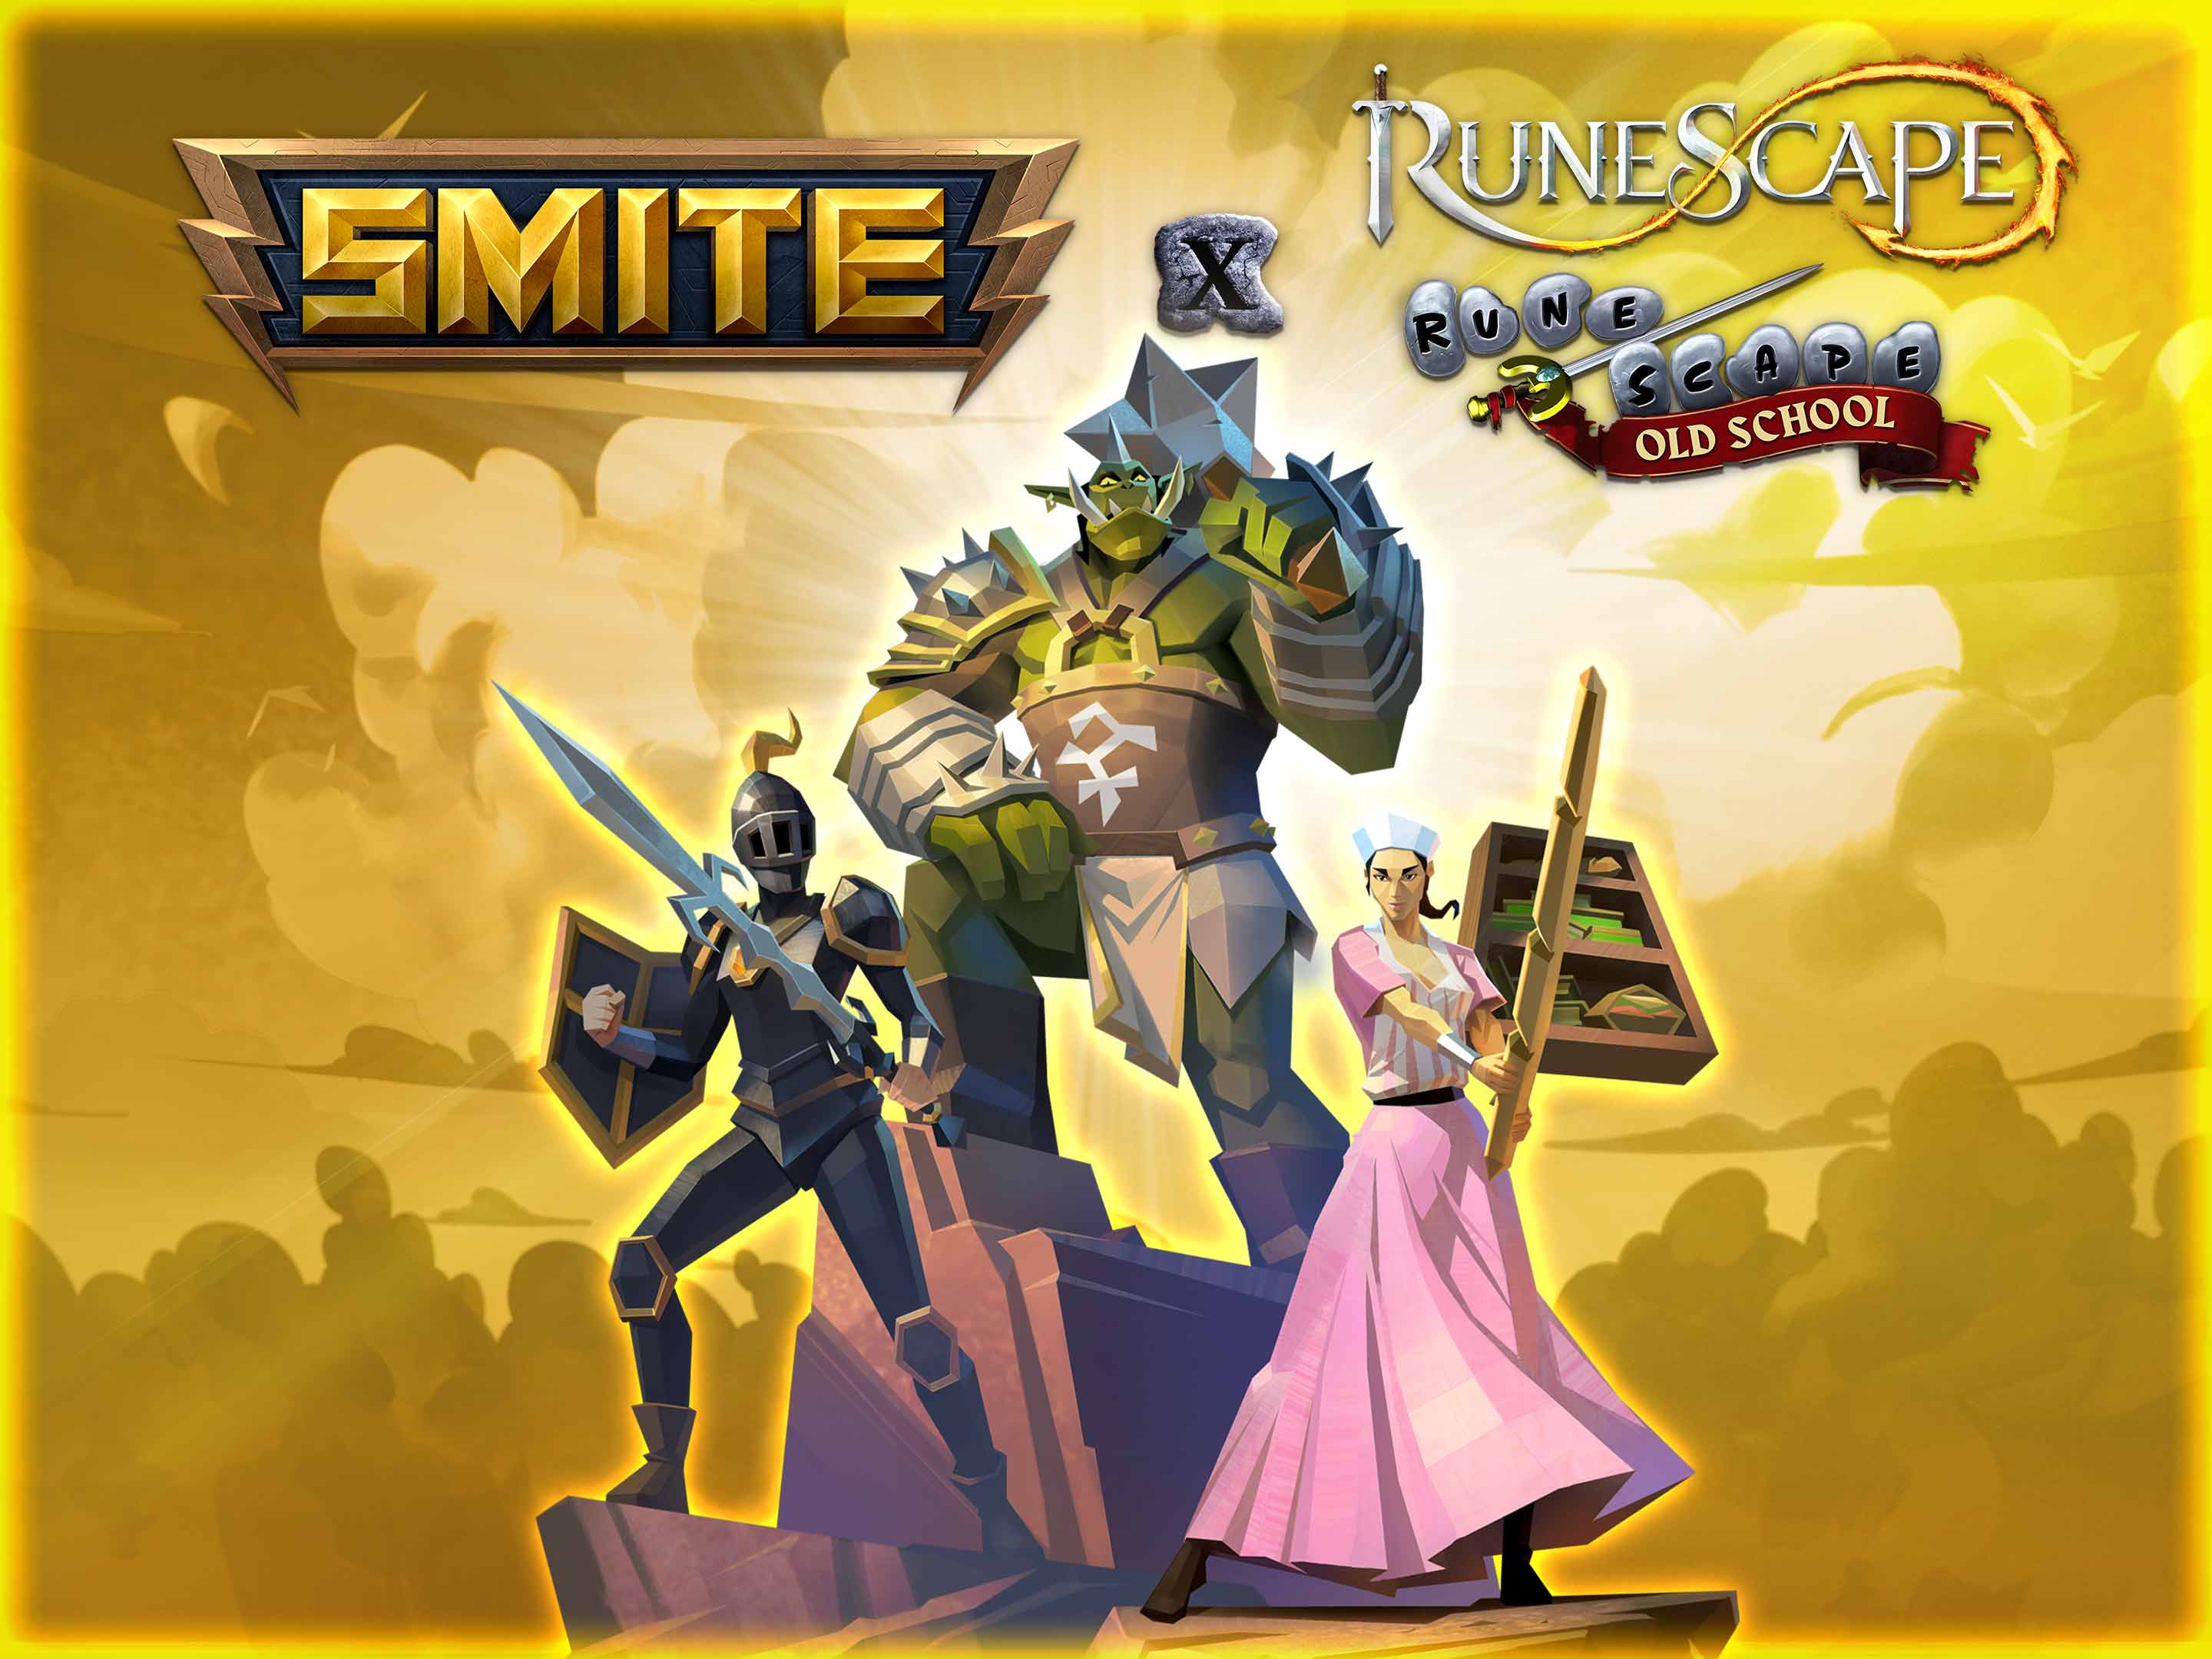 Runescape: saiba como jogar a aventura online para PC